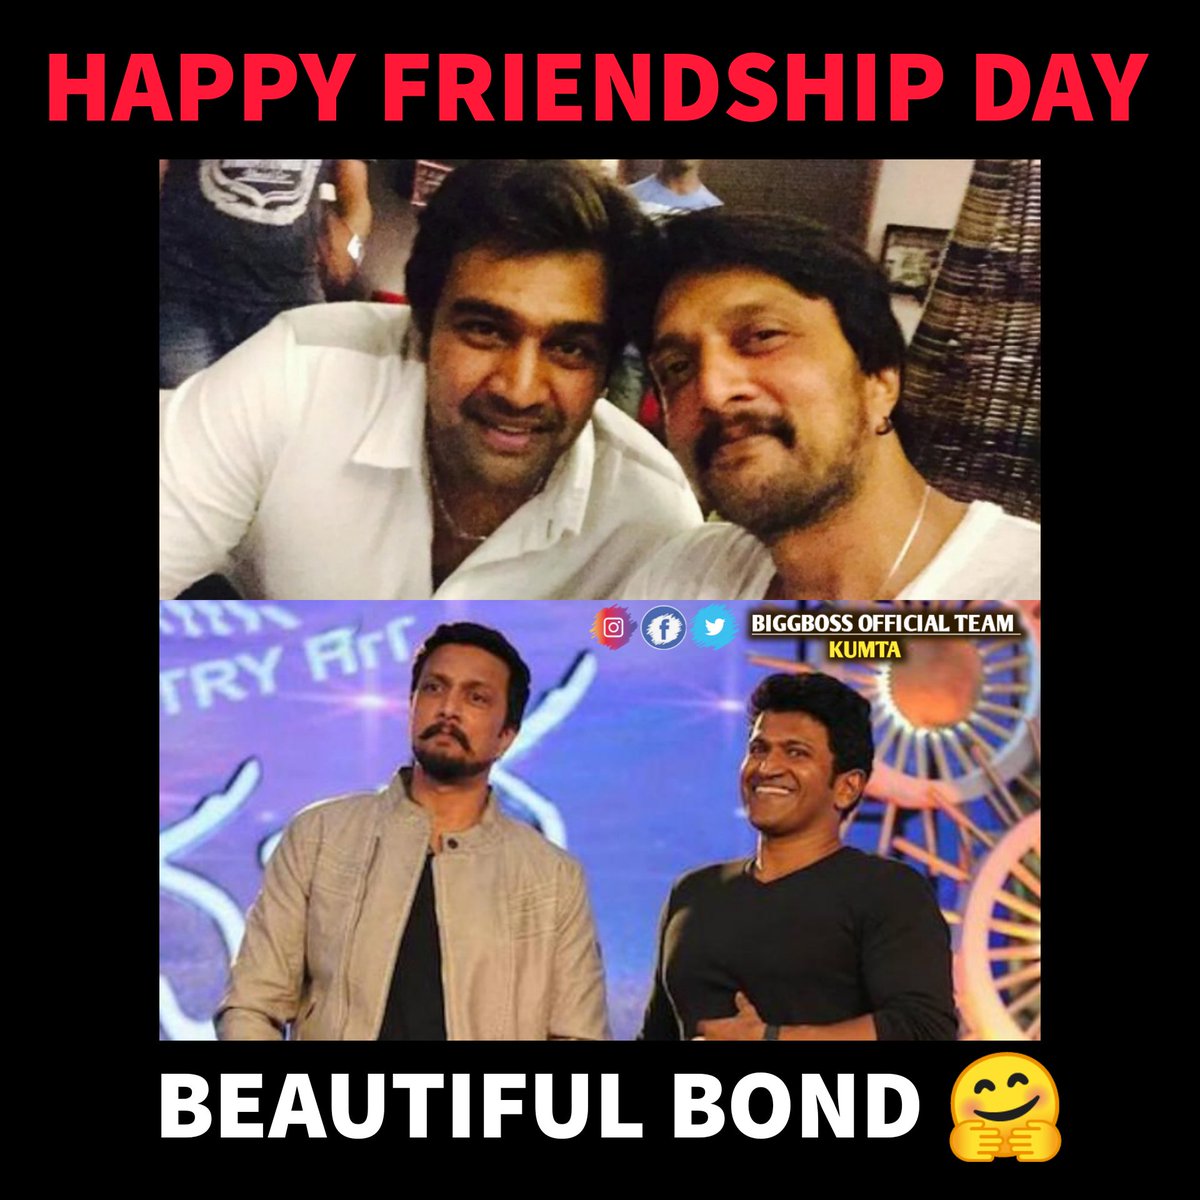 Happy Friendship Day Dear Friends ❤️ lub ewwww olll 
@KicchaSudeep Anna
@chirusarja Anna 
@PuneethRajkumar Anna 

#VikrantRona #VikrantRonaBlockBuster #KicchaFans #VikrantRonaBoxOffice